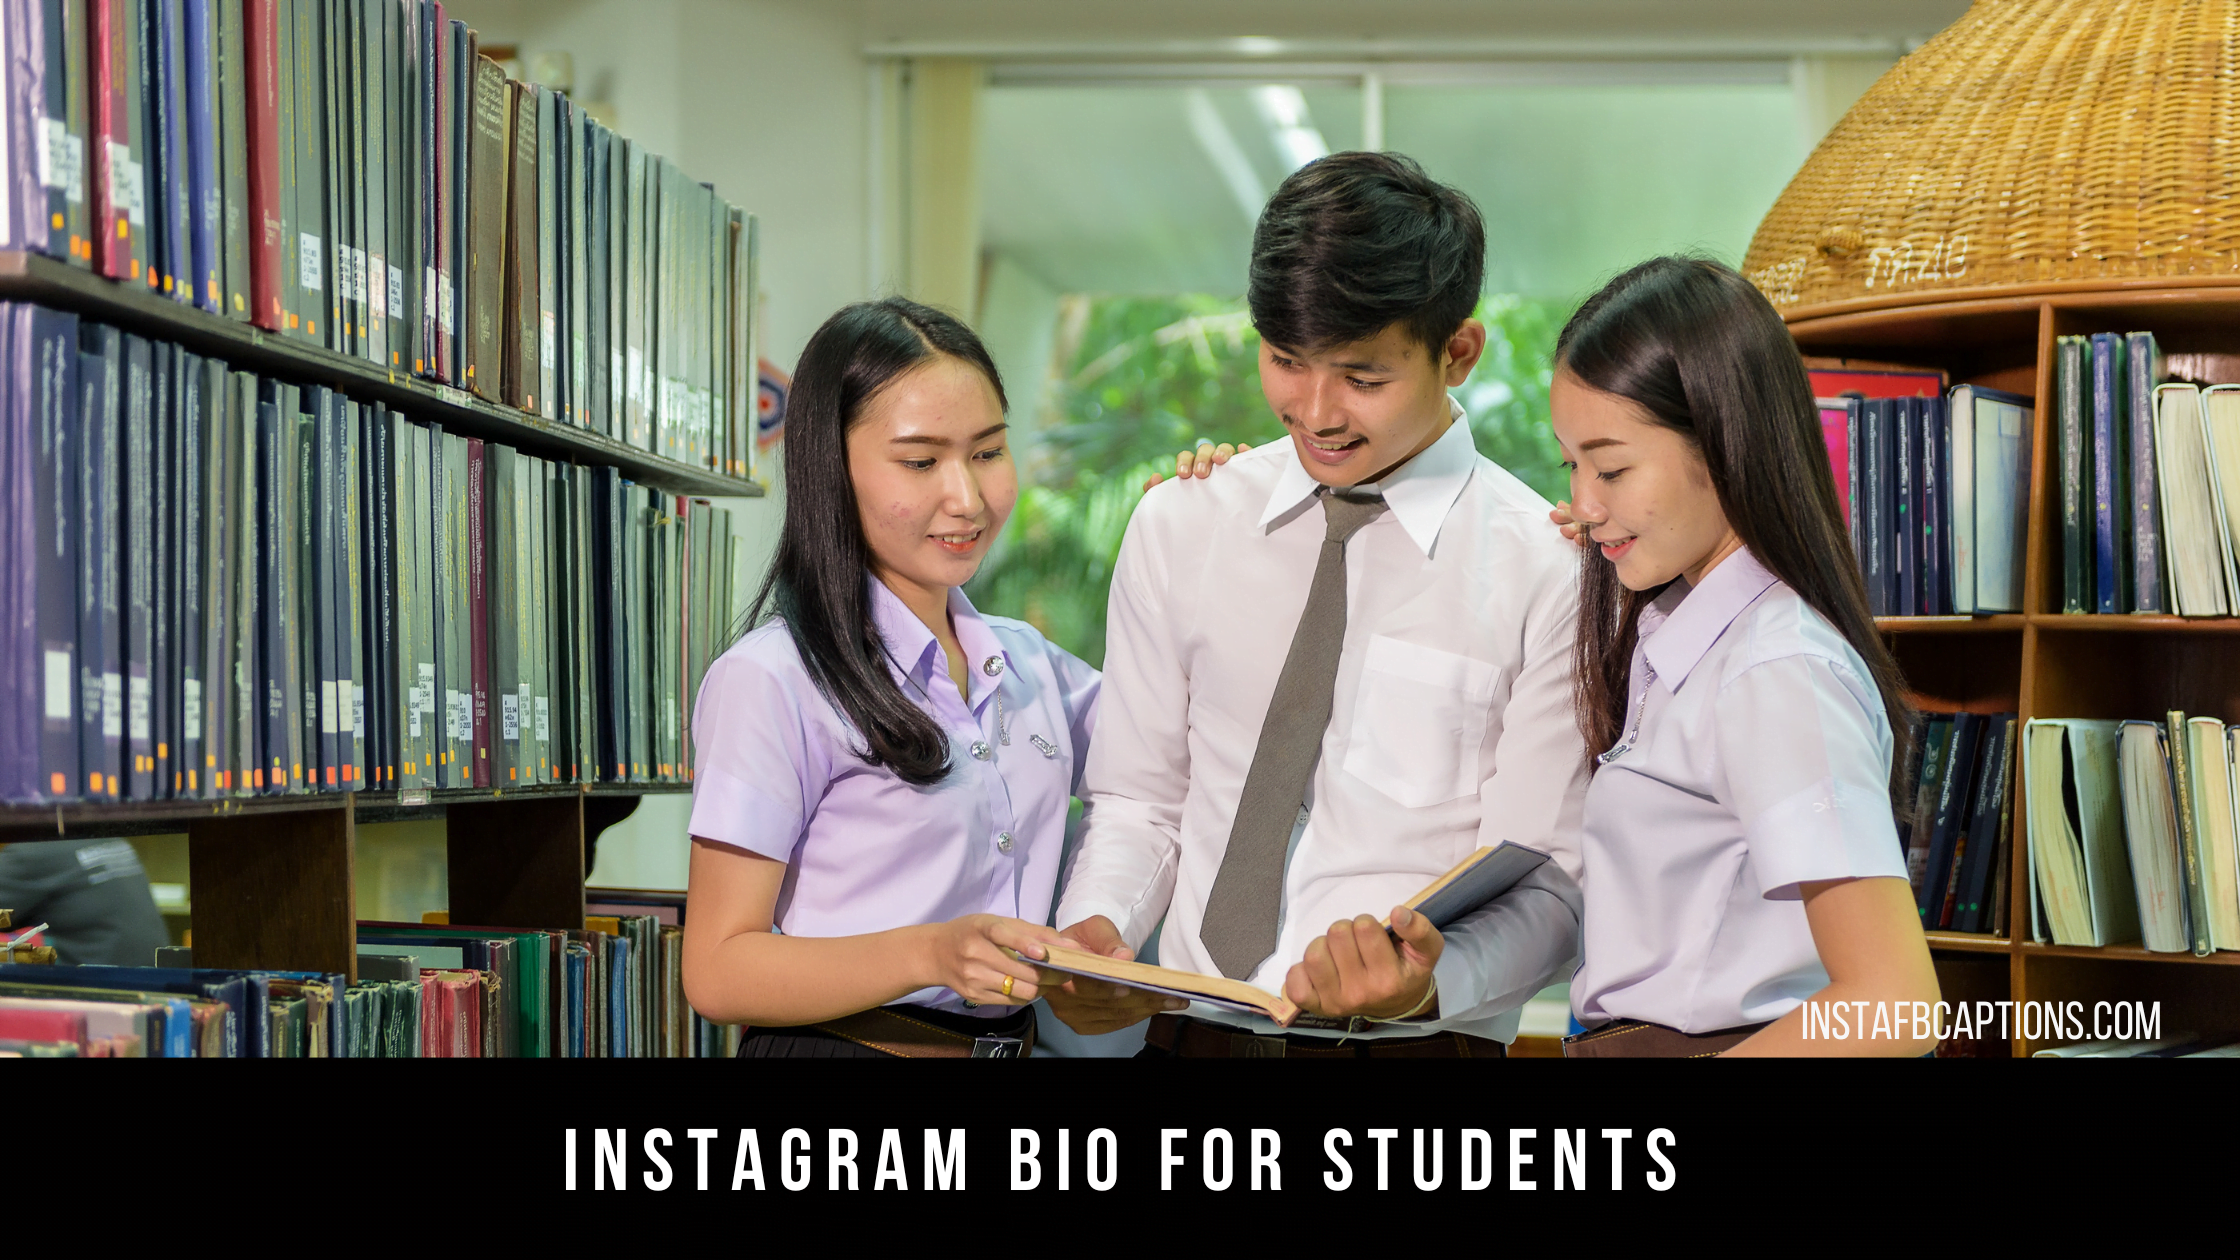 Instagram Bio For Students  - Instagram Bio for Students - [New] Instagram Bio for Students in 2023